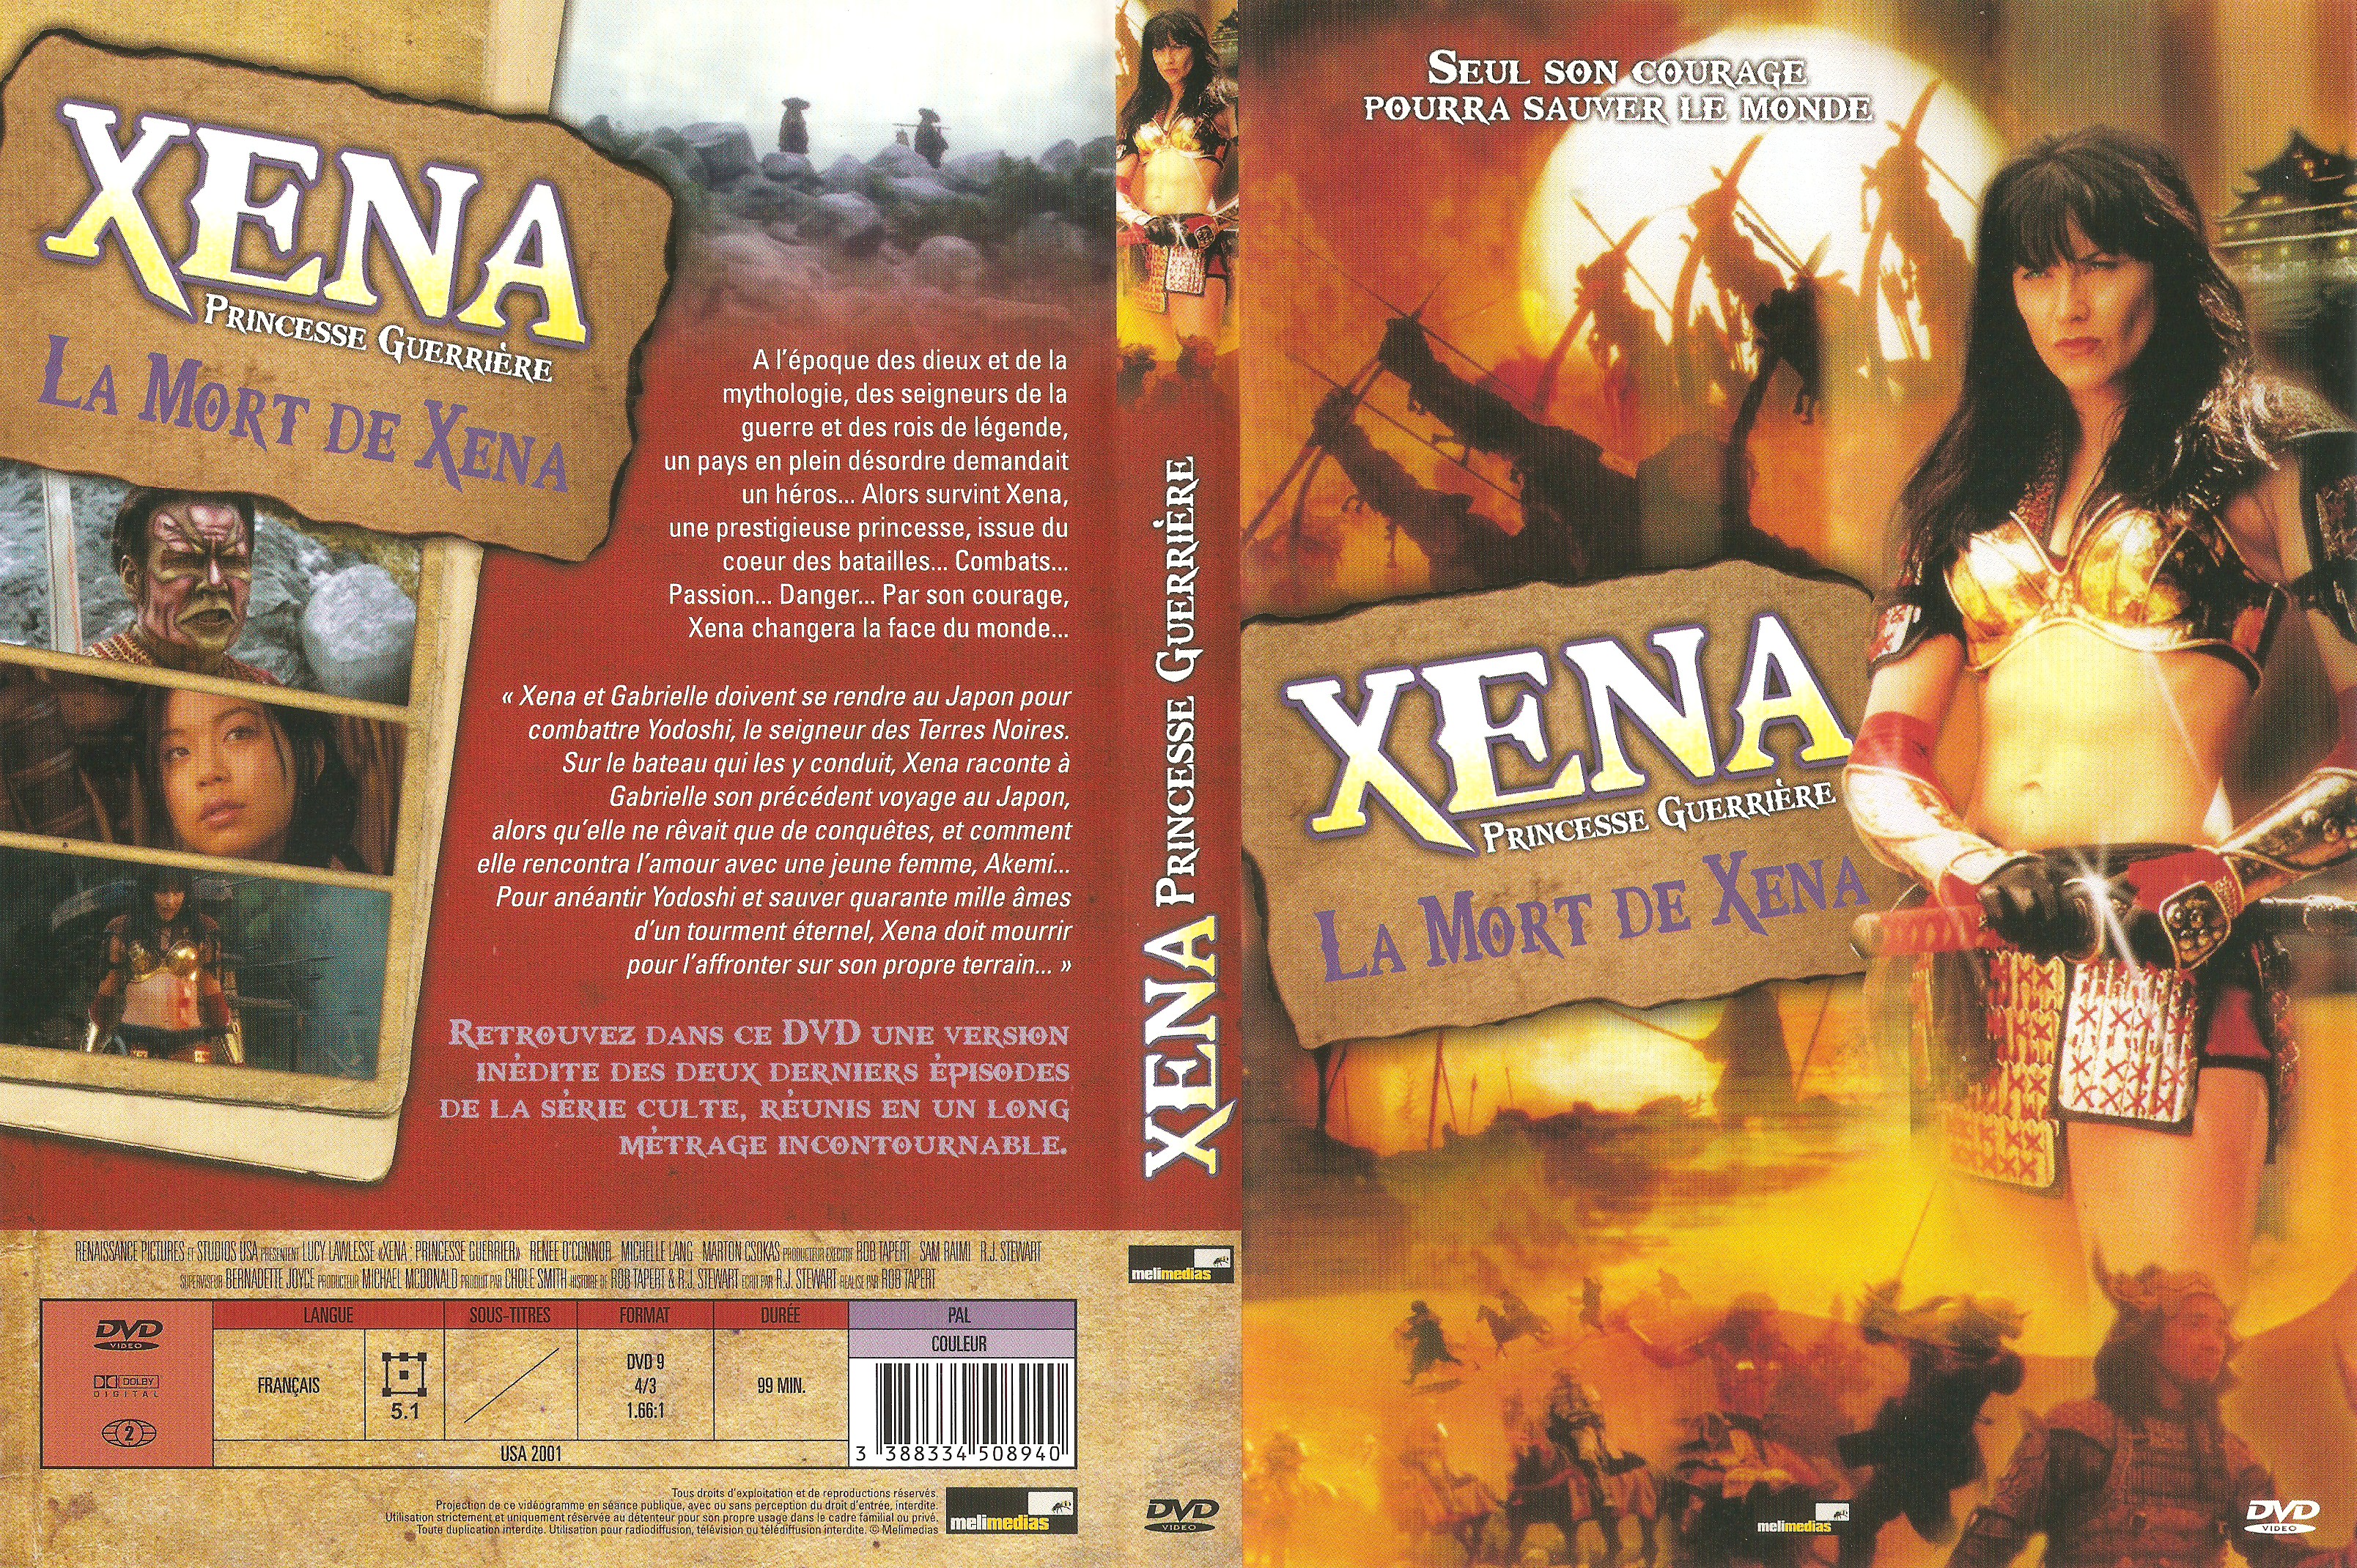 Jaquette DVD Xena princesse guerriere la mort de Xena v2